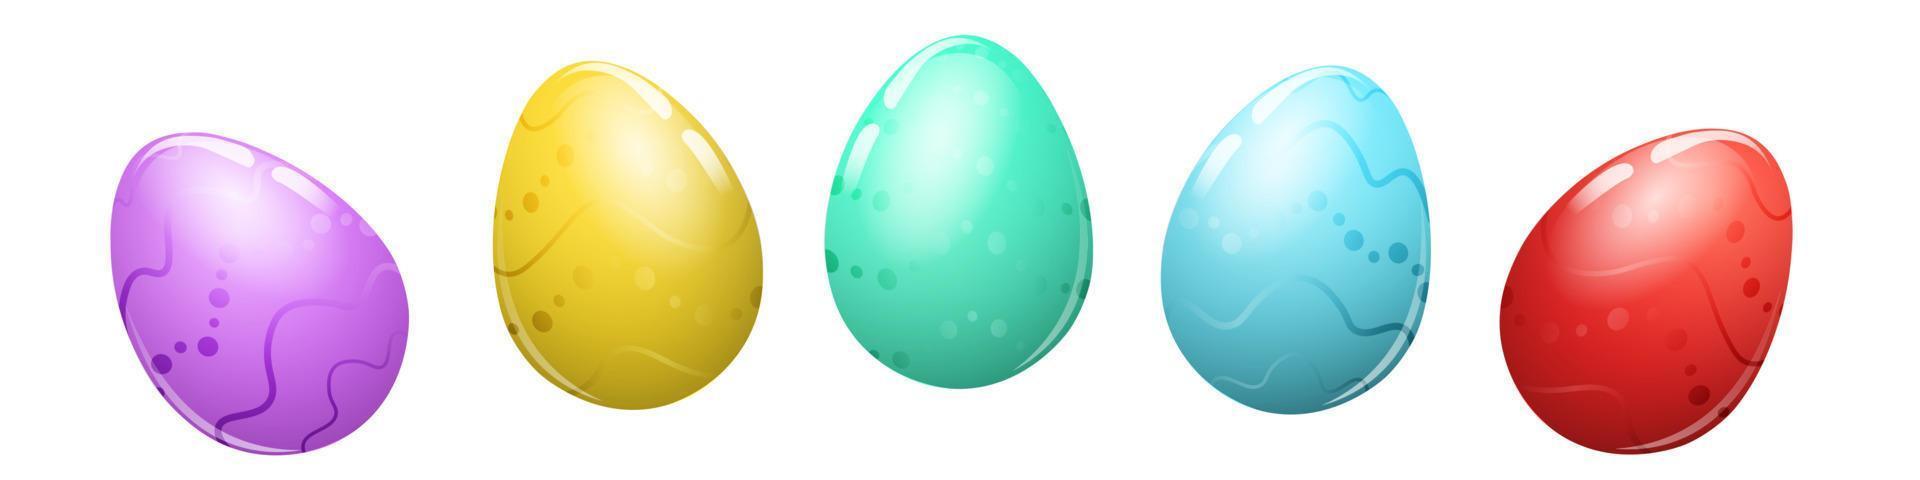 set di uova colorate di pasqua vettore